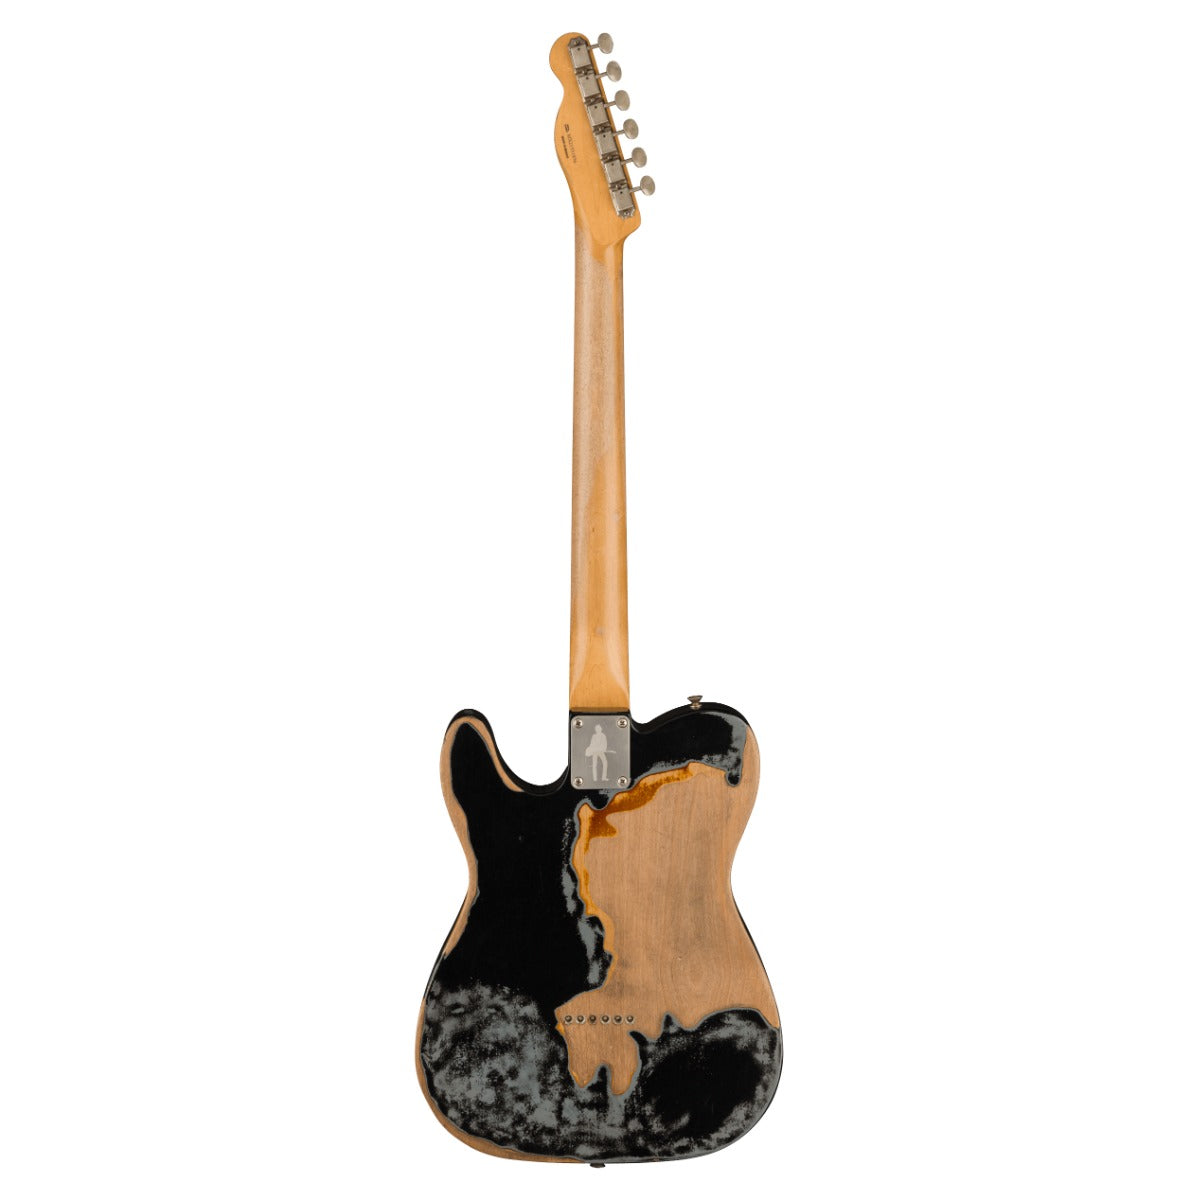 Fender Joe Strummer Telecaster - Road Worn Black, View 4